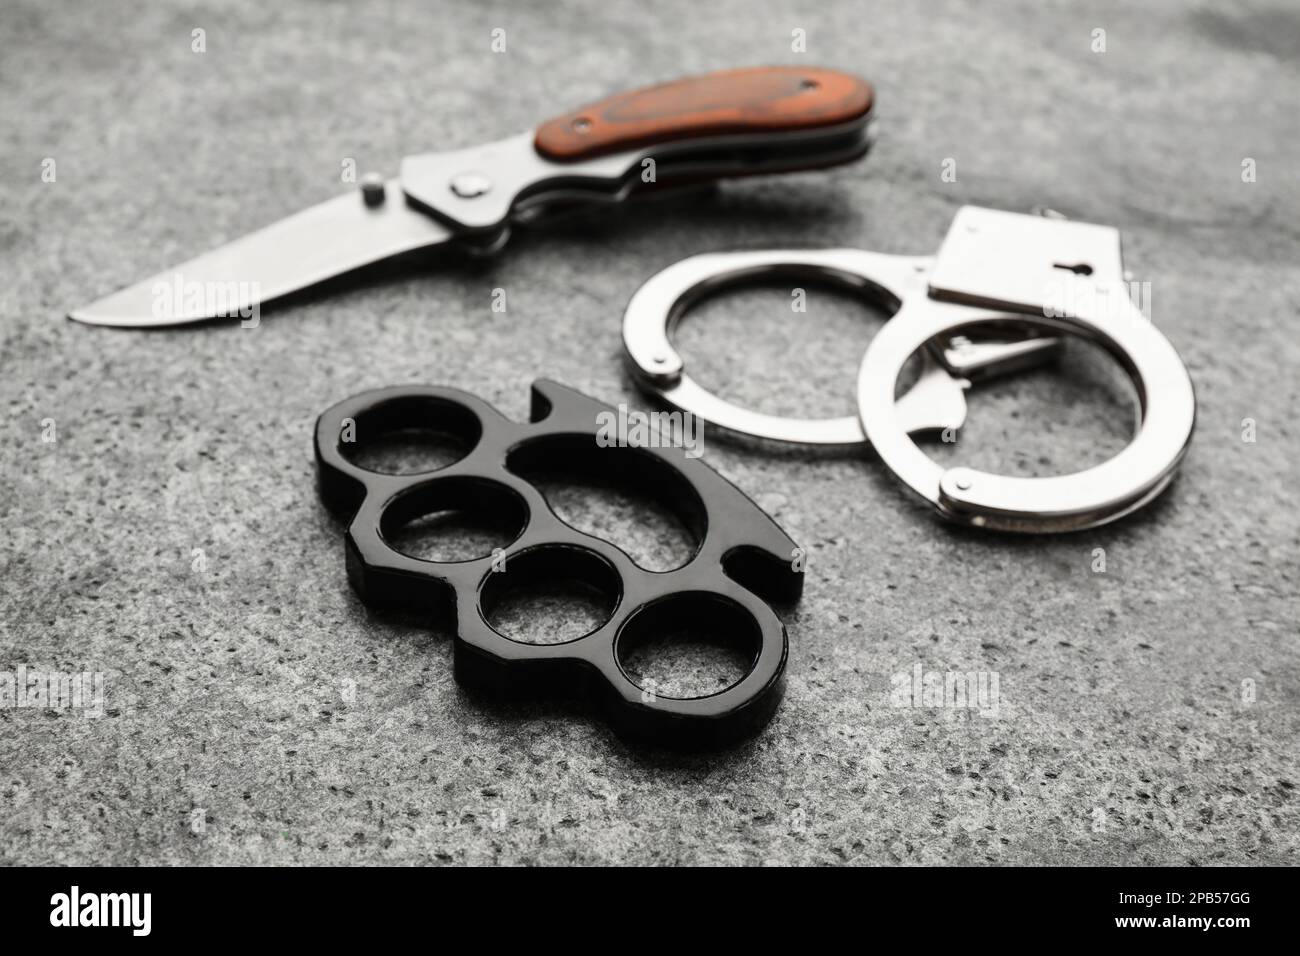 https://c8.alamy.com/comp/2PB57GG/brass-knuckles-handcuffs-and-knife-on-grey-background-2PB57GG.jpg